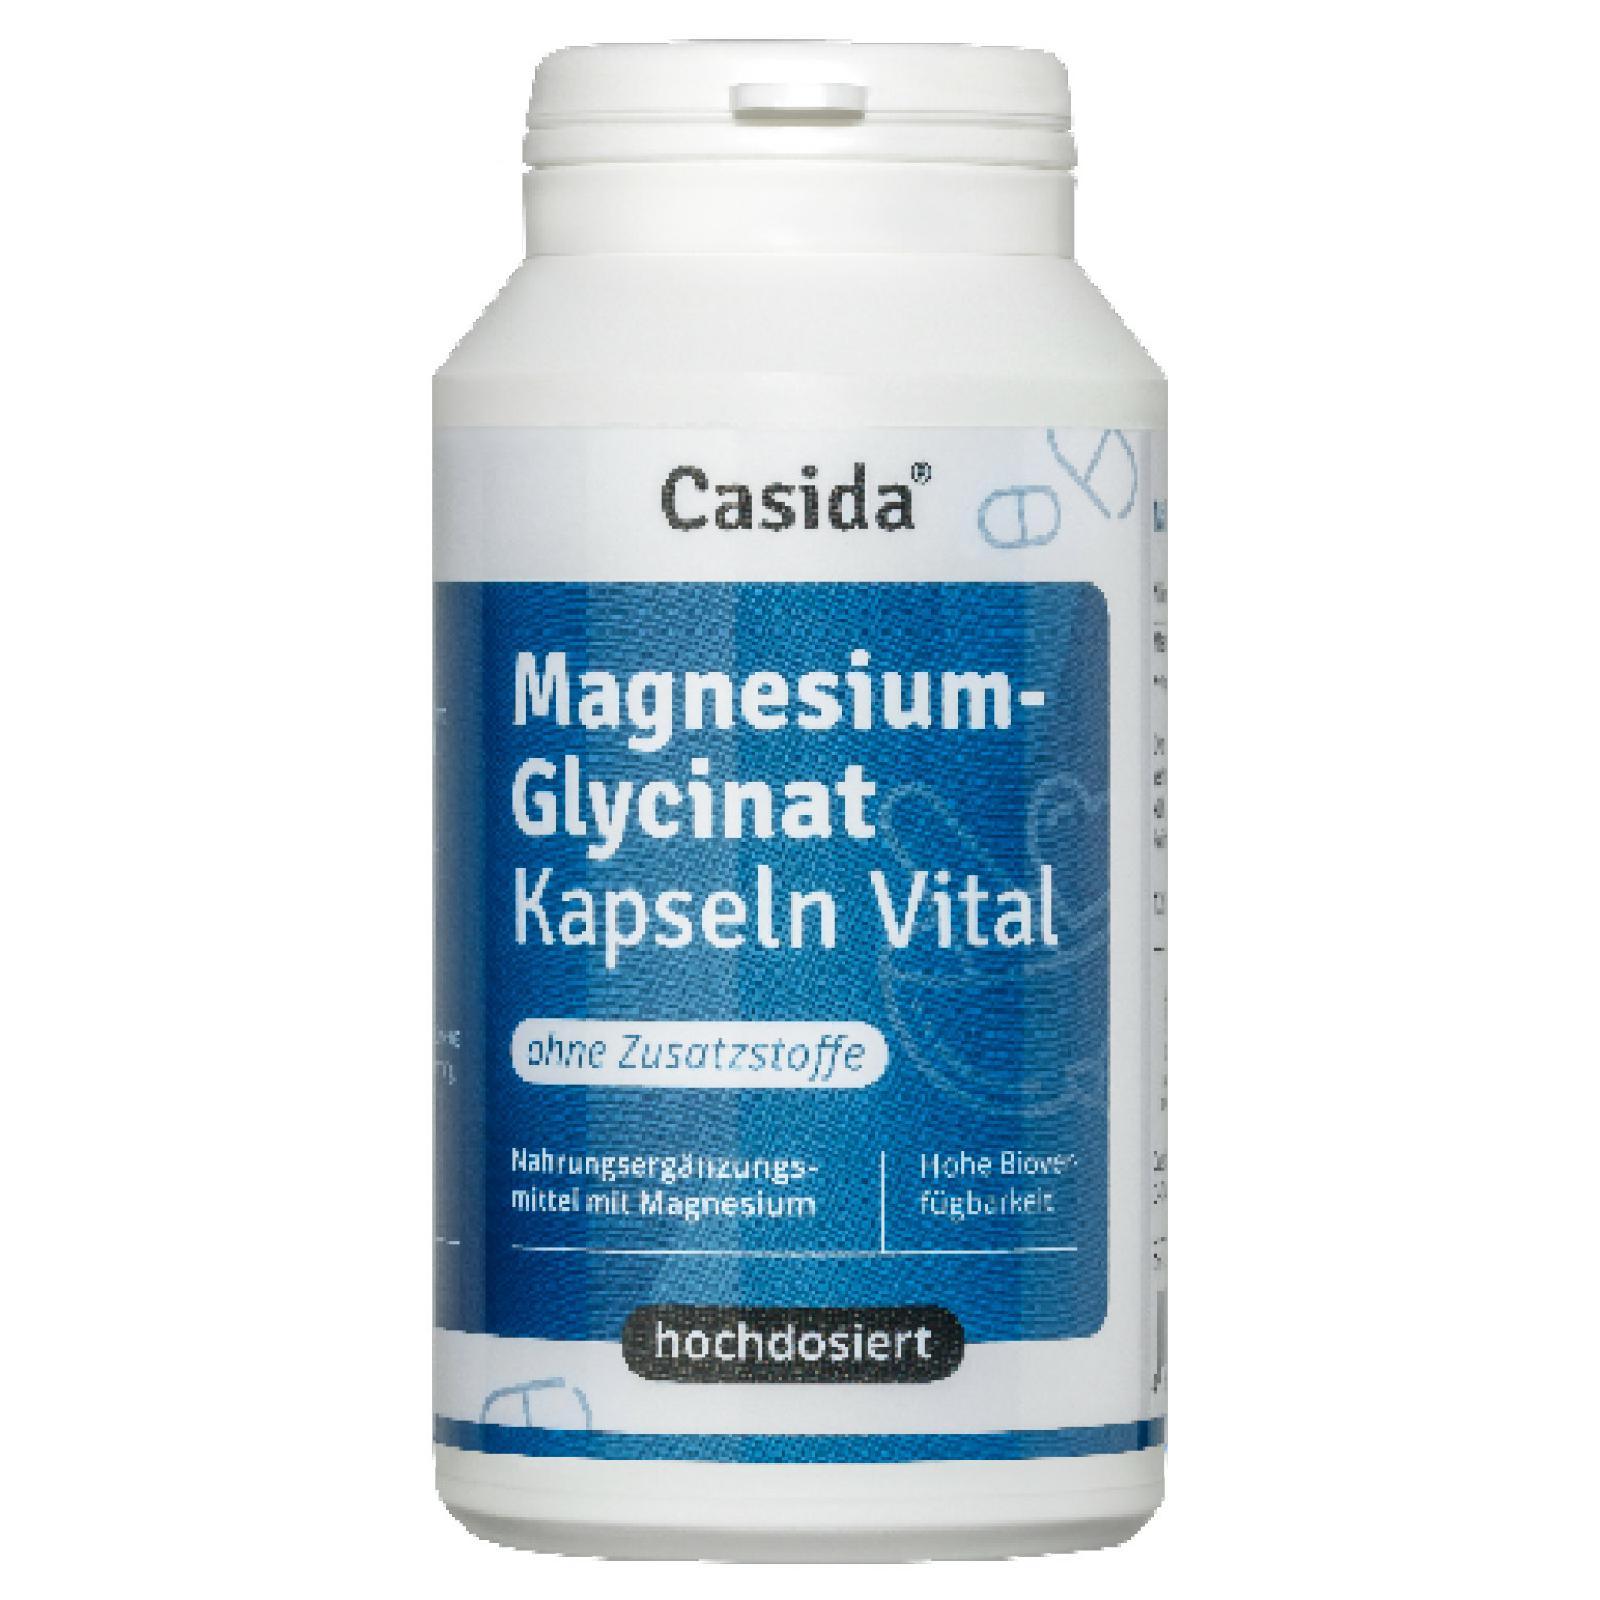 Casida Magnesiumglycinat Kapseln Vital